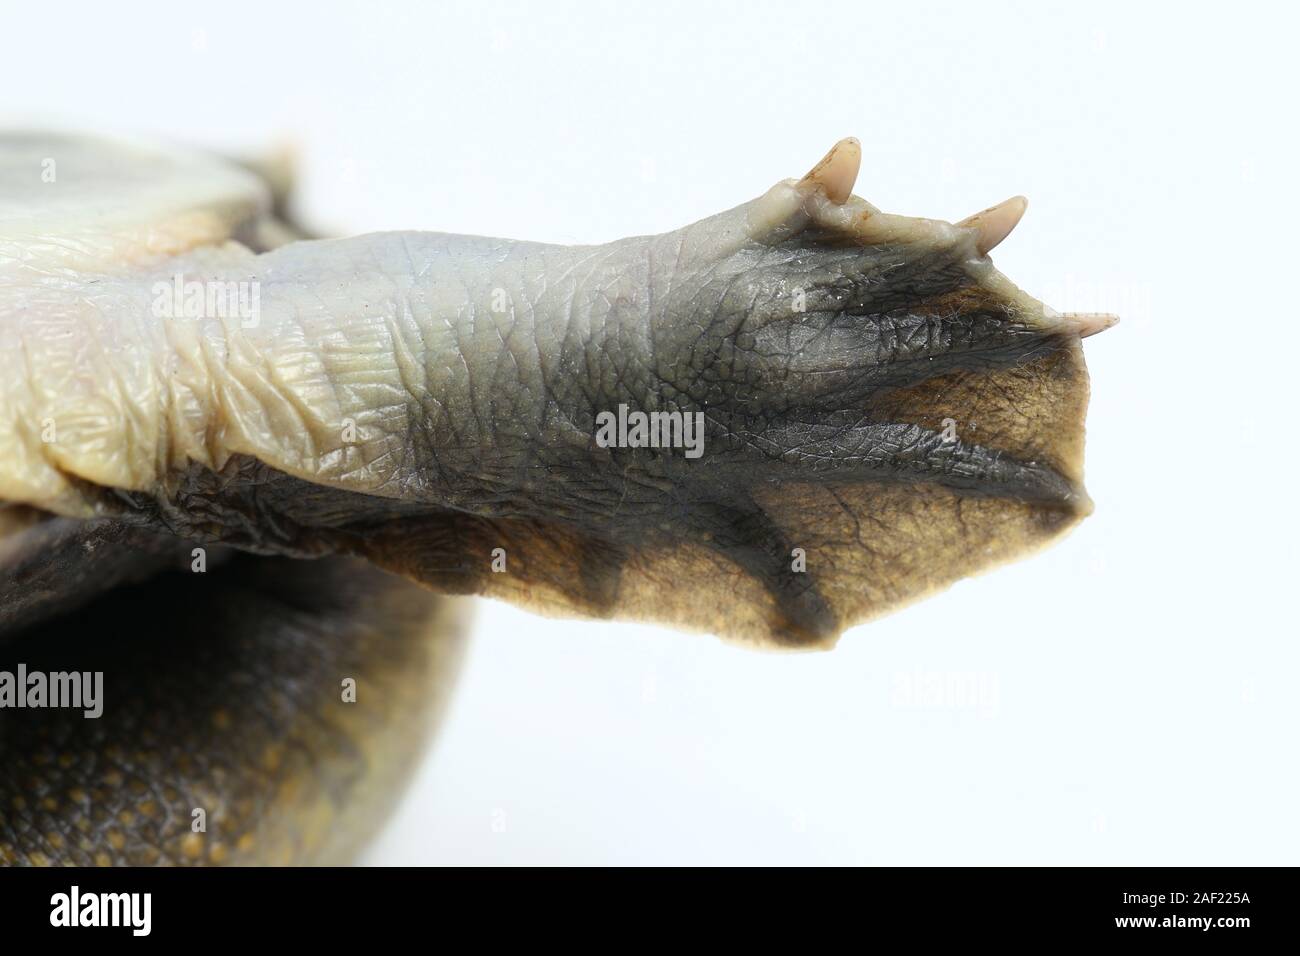 Common softshell turtle or asiatic softshell turtle (Amyda cartilaginea) isolated on white background Stock Photo